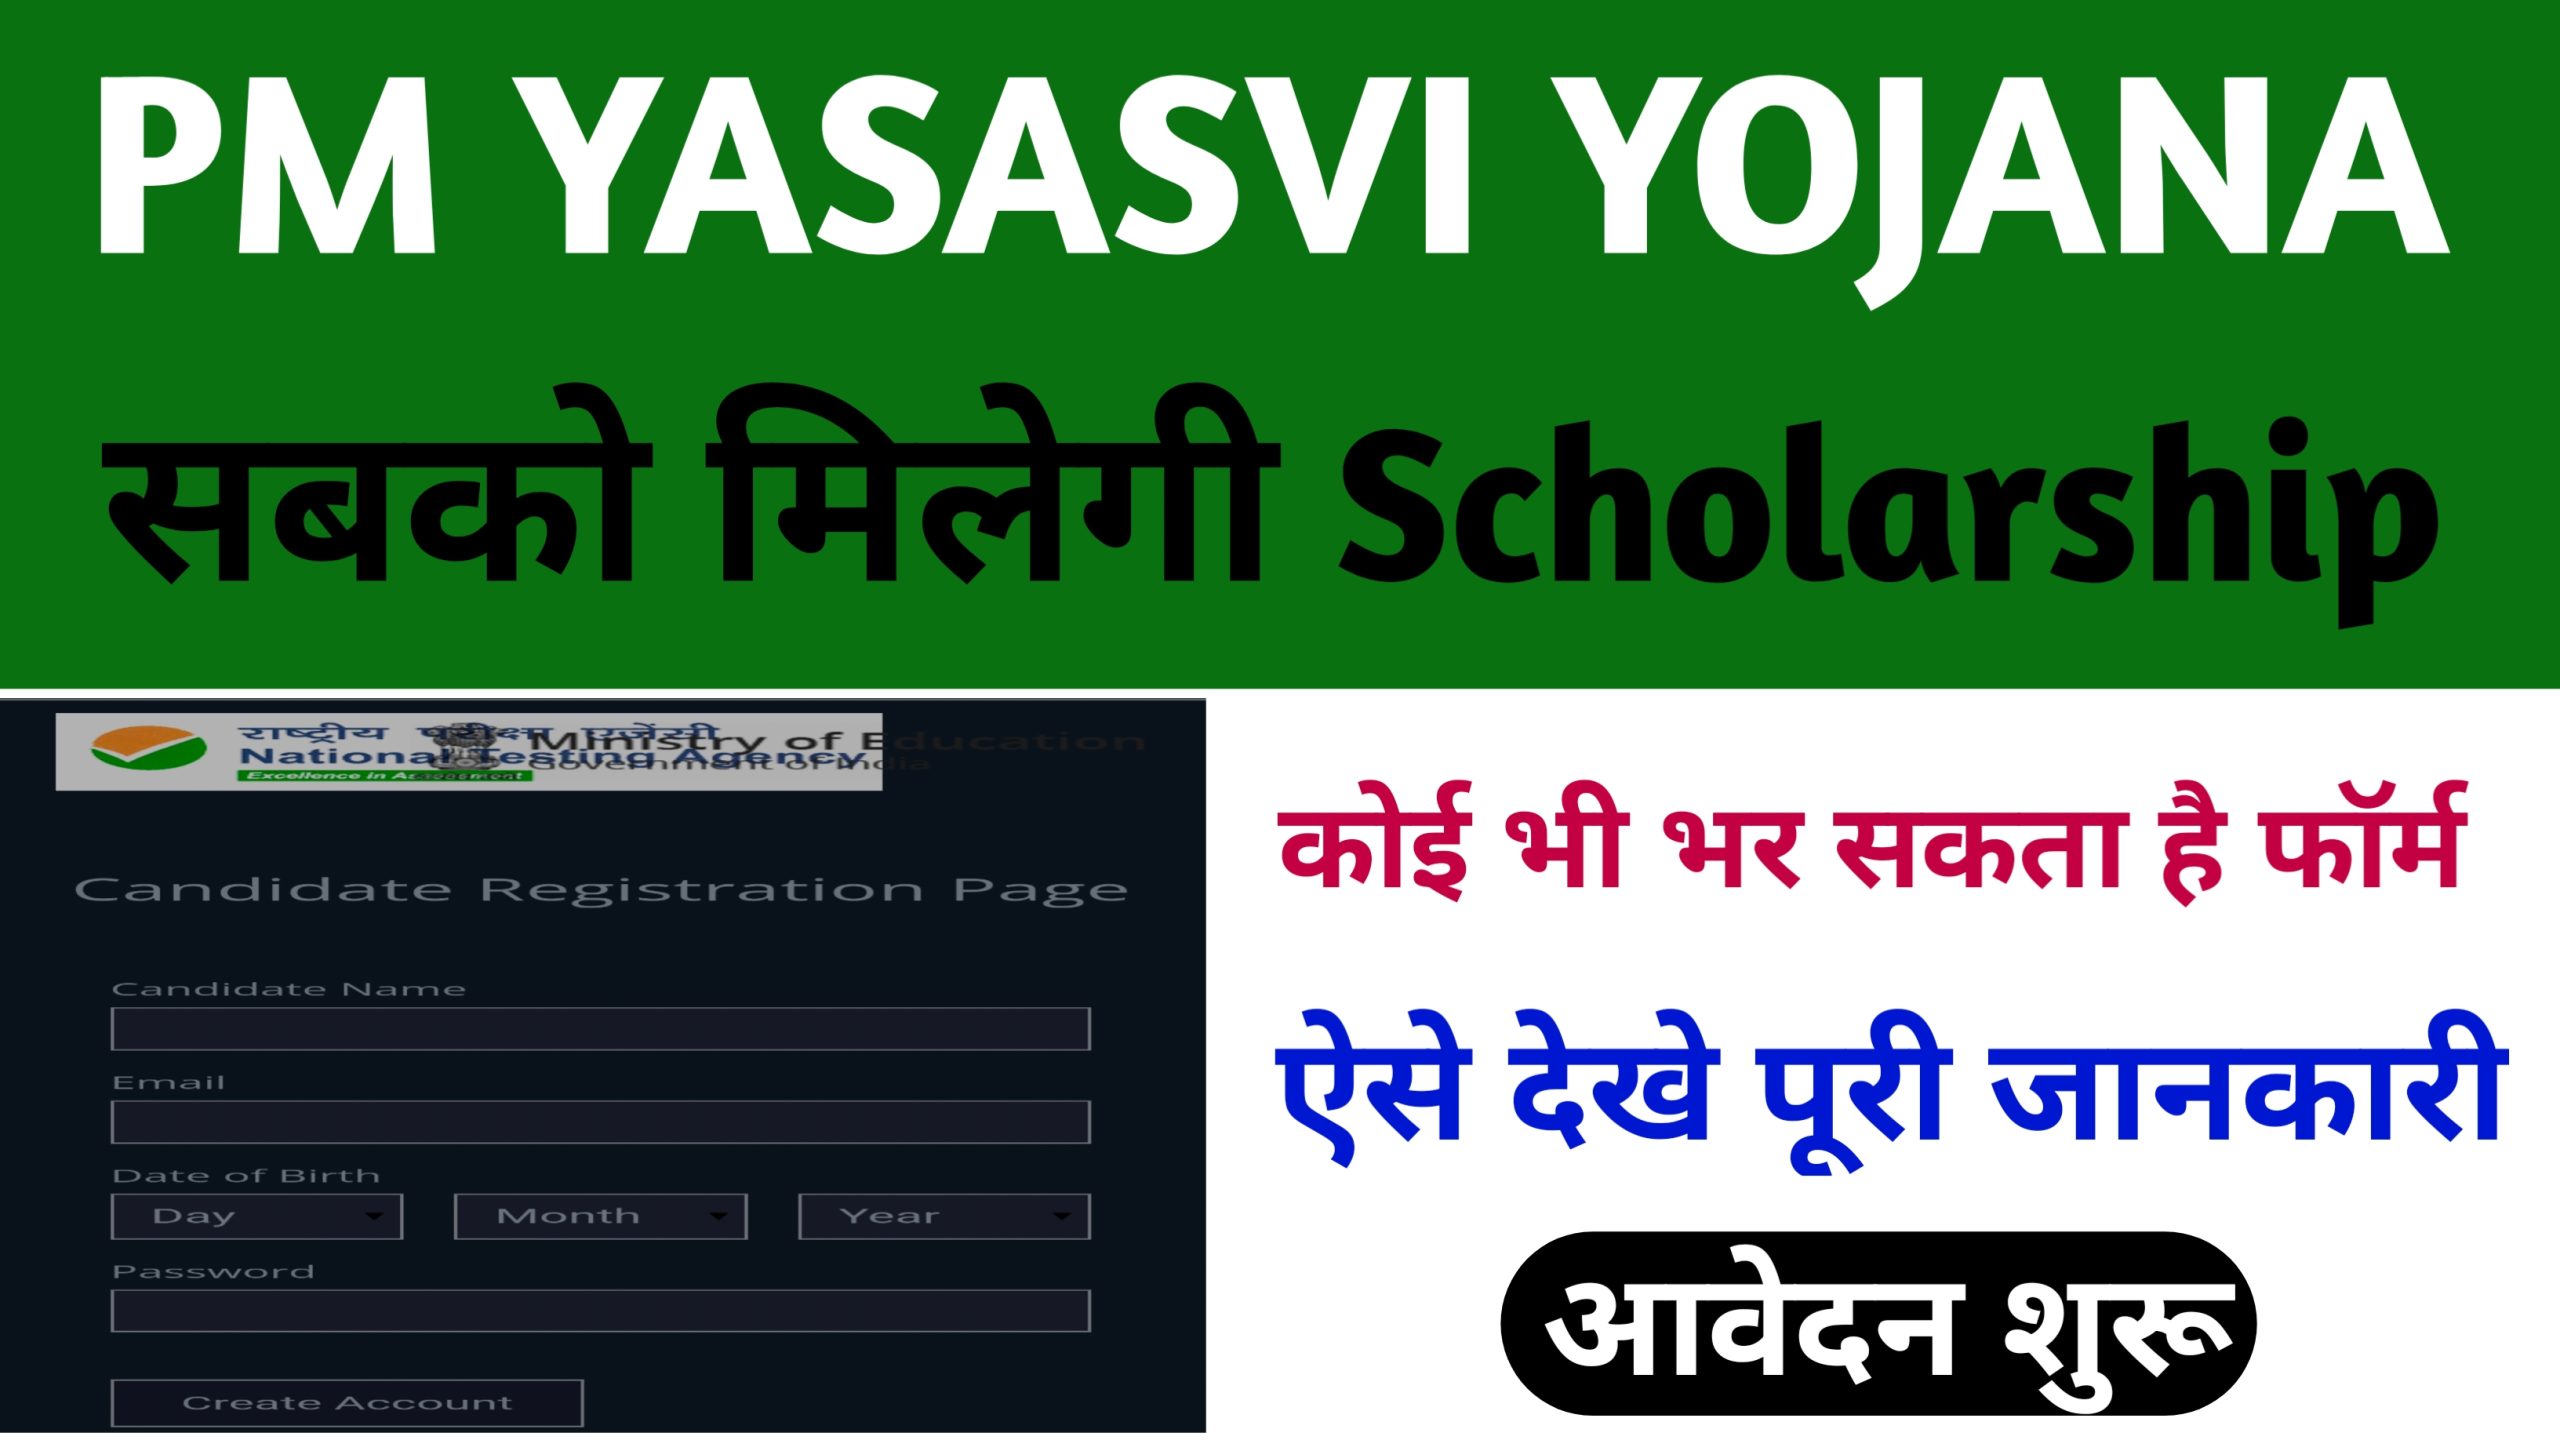 Pm Yasasvi Scholarship yojana : 2 lakh की स्कॉलरशिप, ऐसे करे आवेदन 